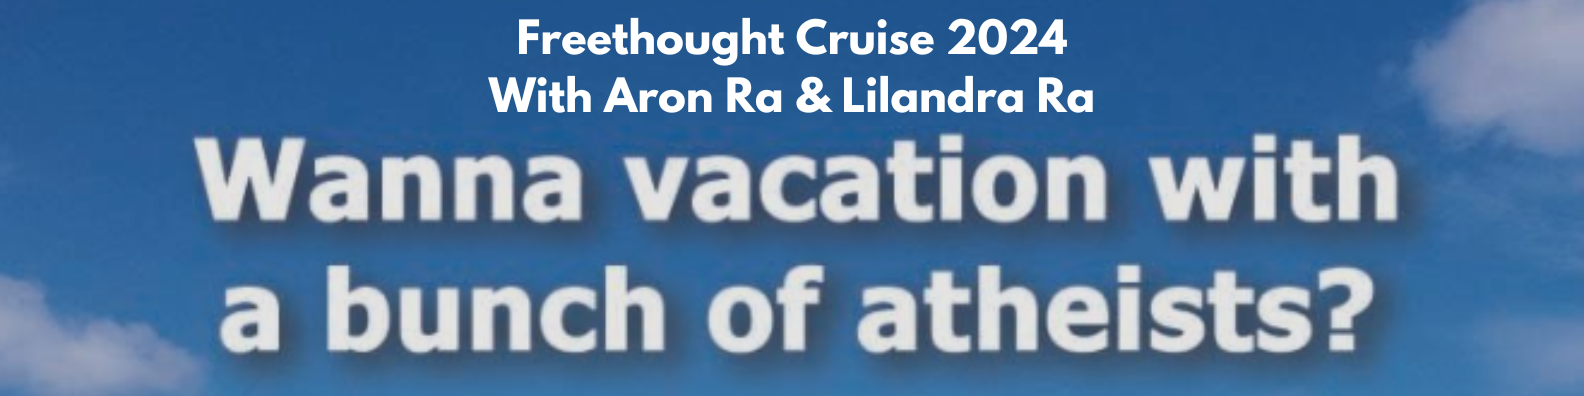 Freethought Cruise with Aron Ra & Lilandra Ra 2024 (February 3rd - 10th)